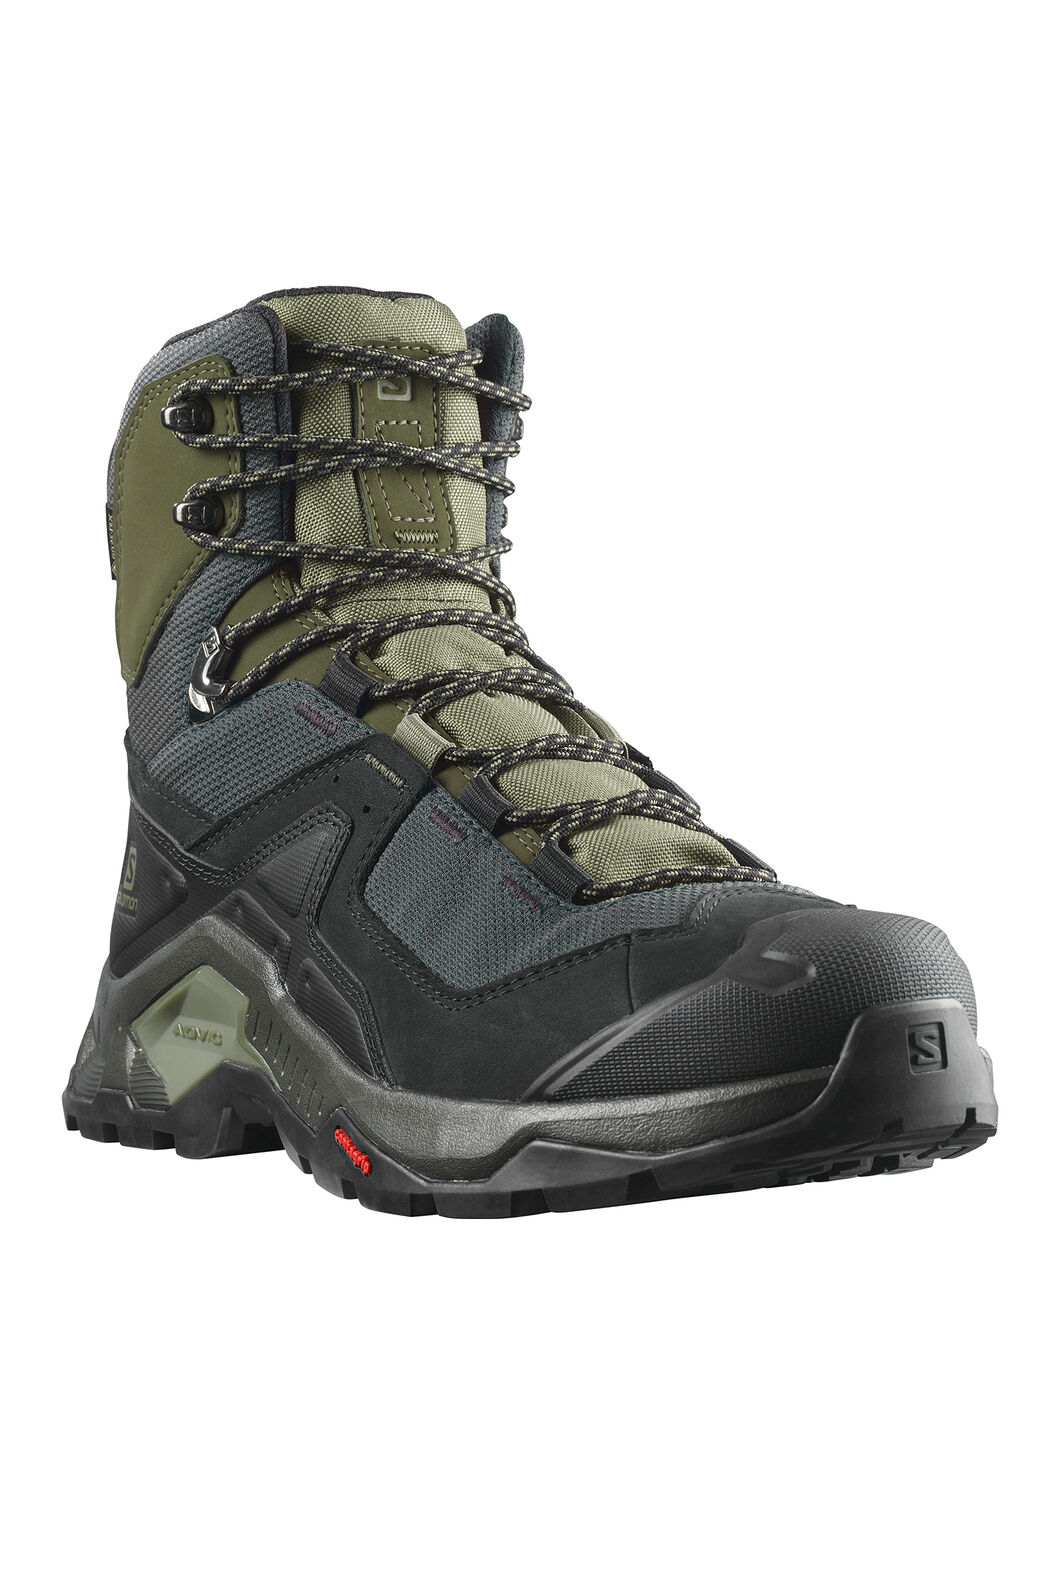 Salomon Men's Element GTX Hiking Boots Macpac